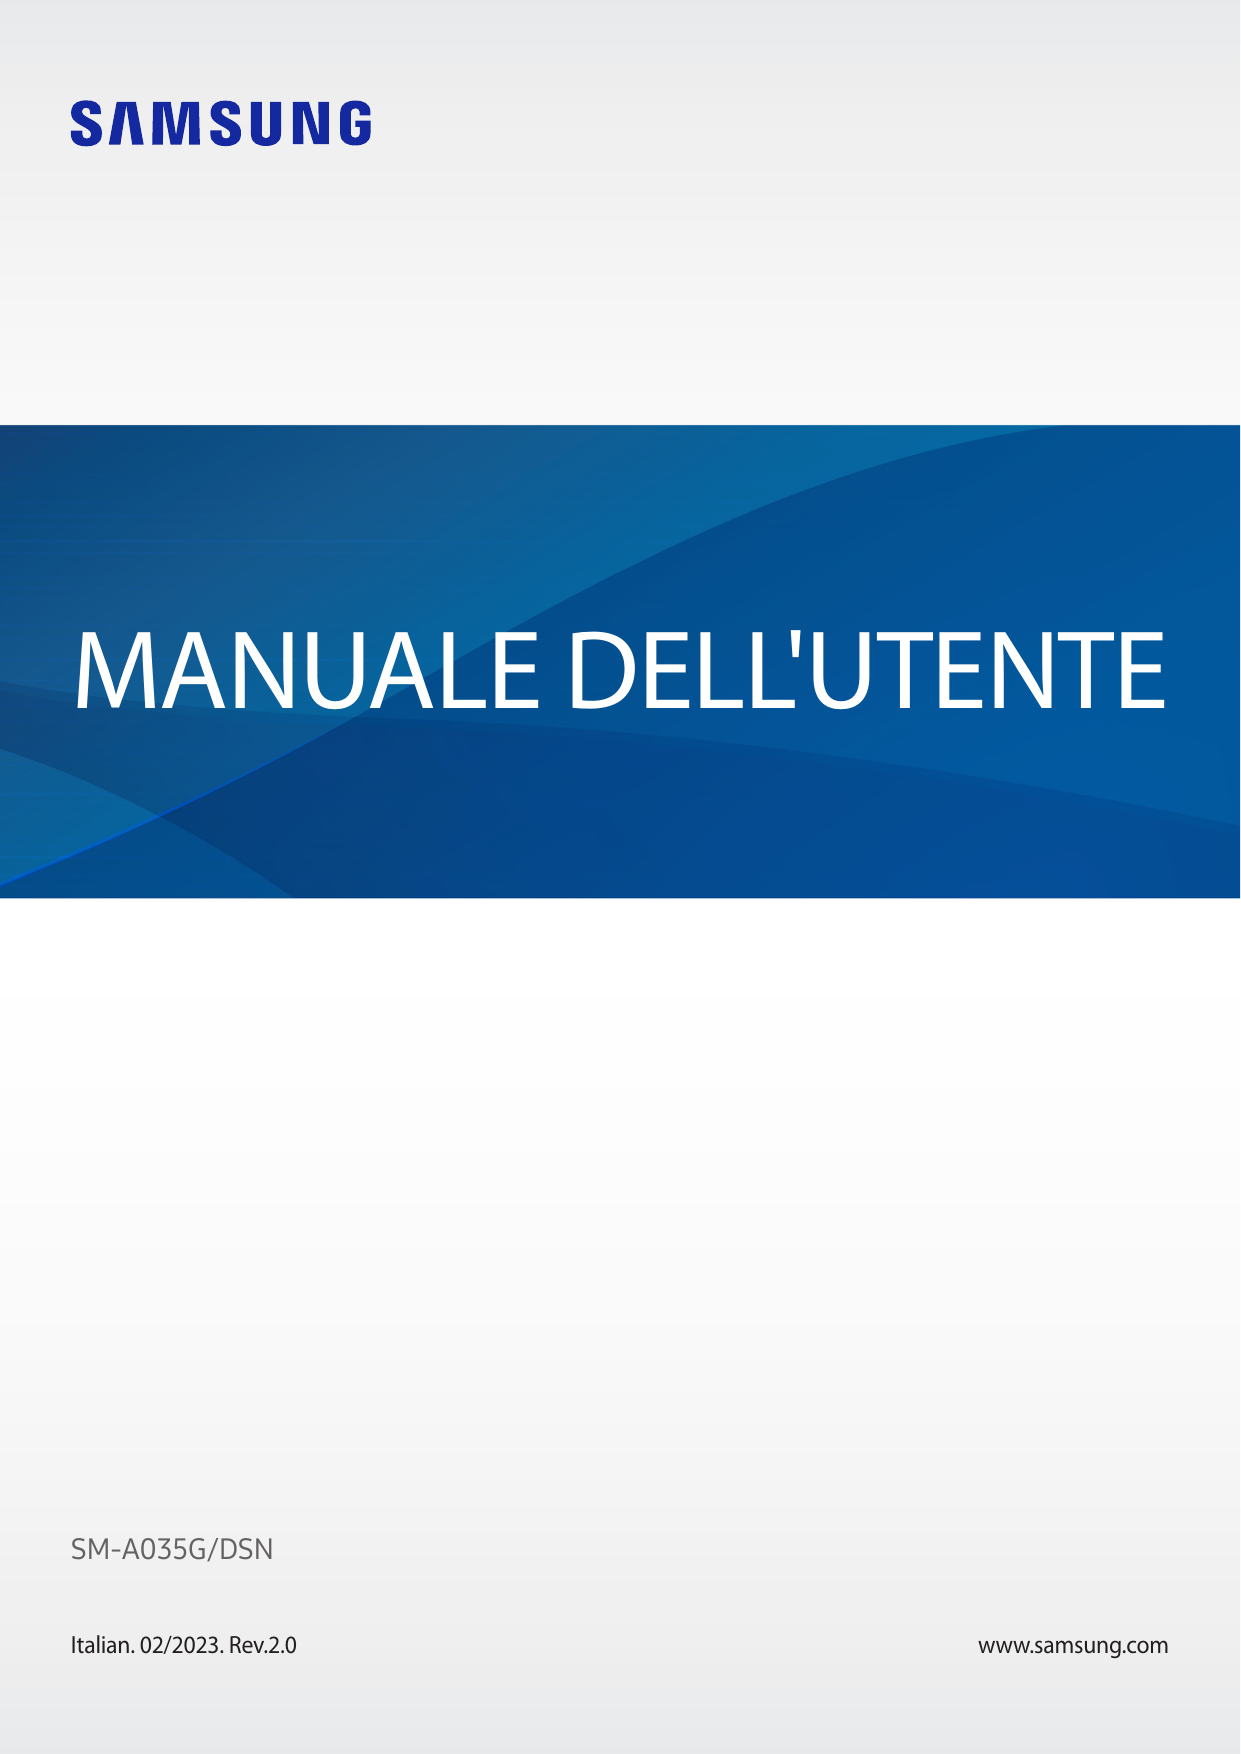 MANUALE DELL'UTENTESM-A035G/DSNItalian. 02/2023. Rev.2.0www.samsung.com